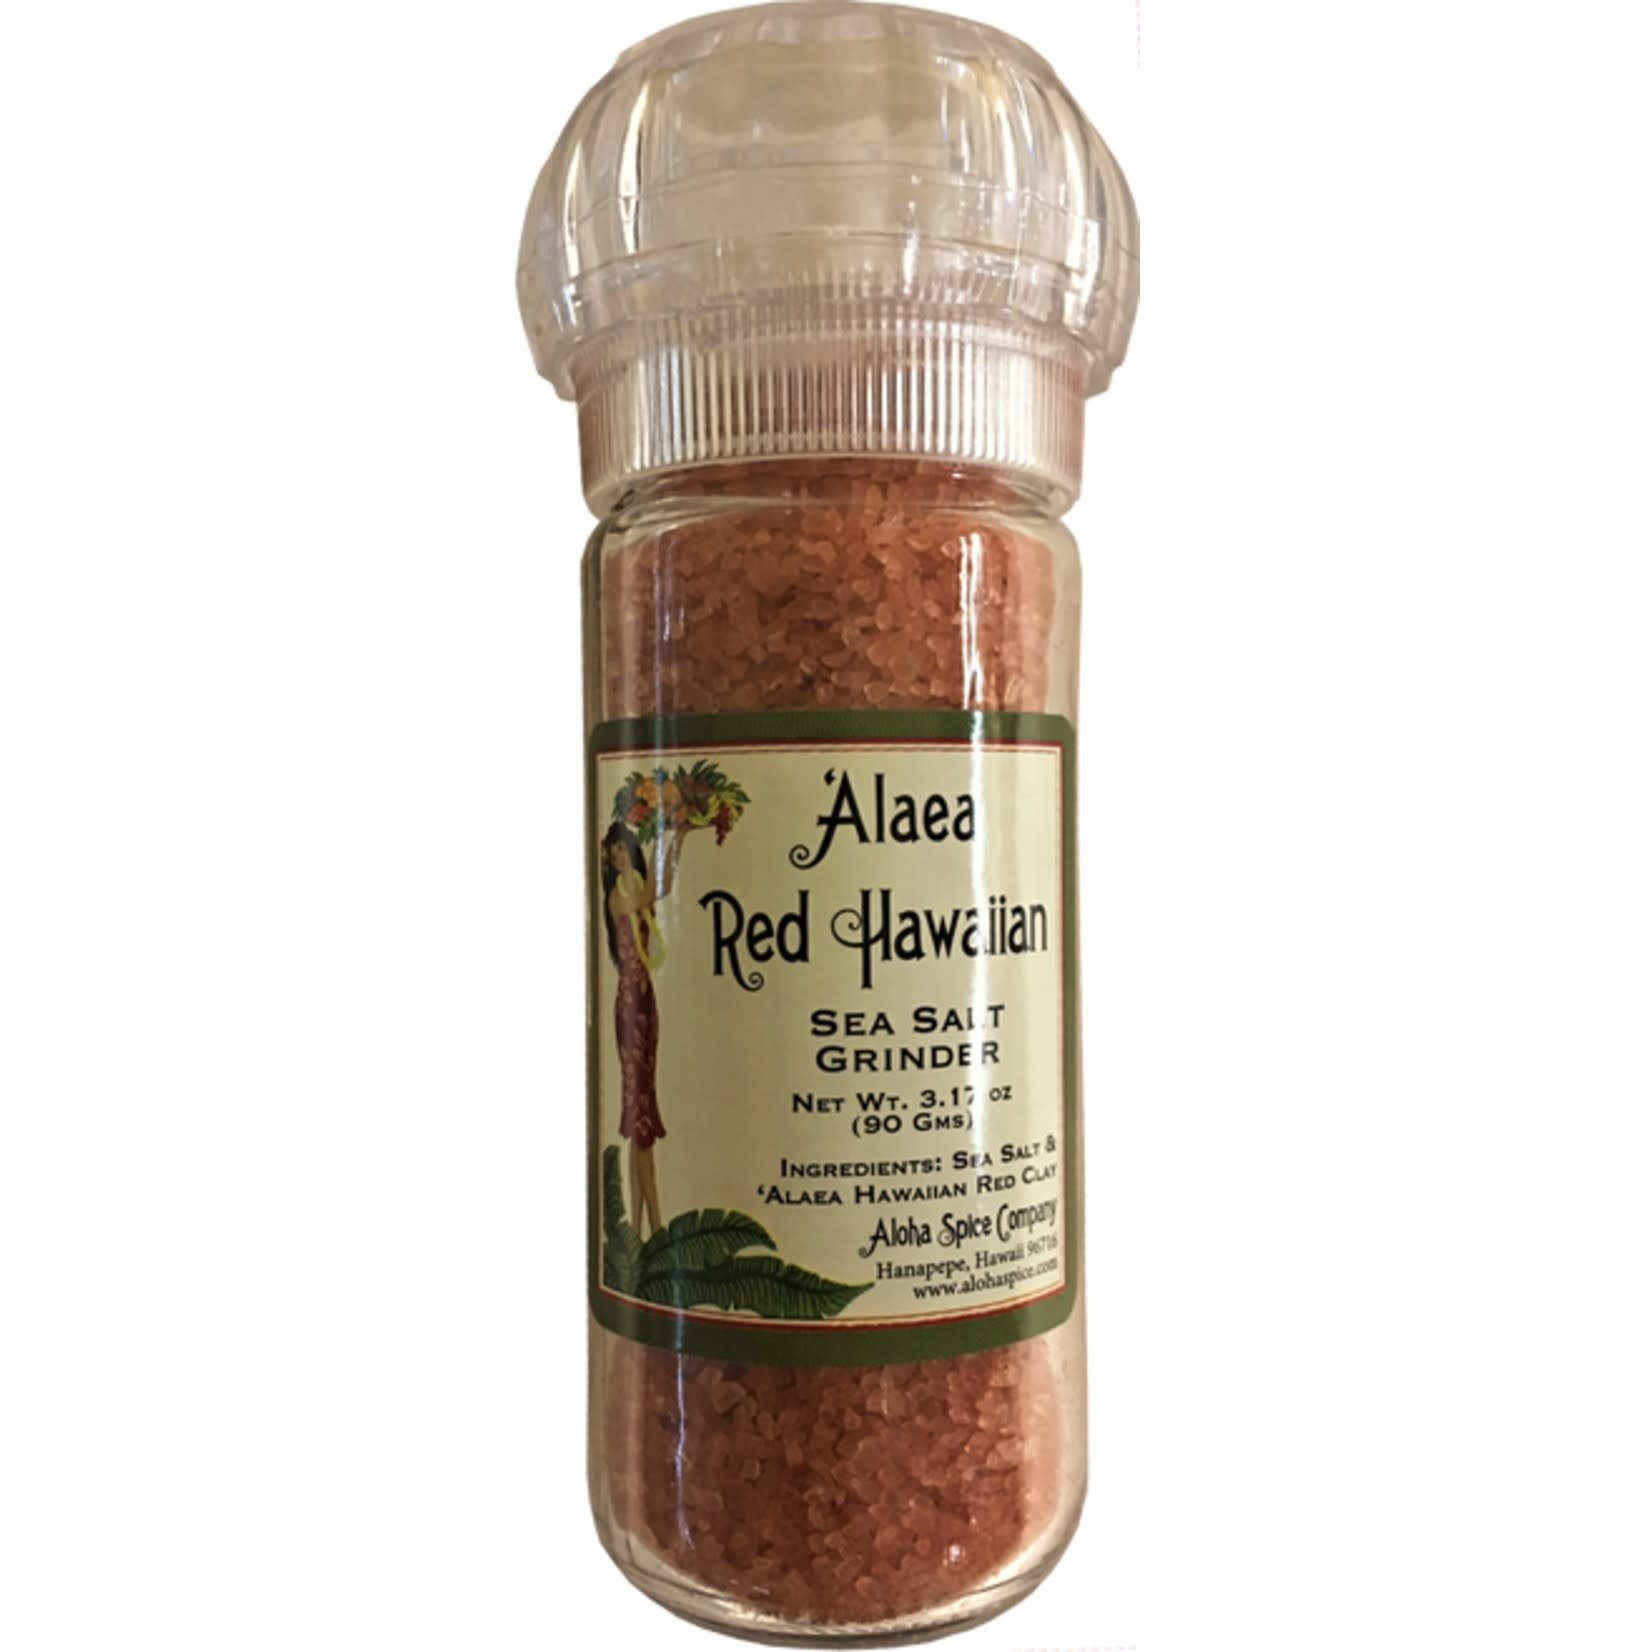 Aloha Spice Co. Alaea Red Salt Grinder